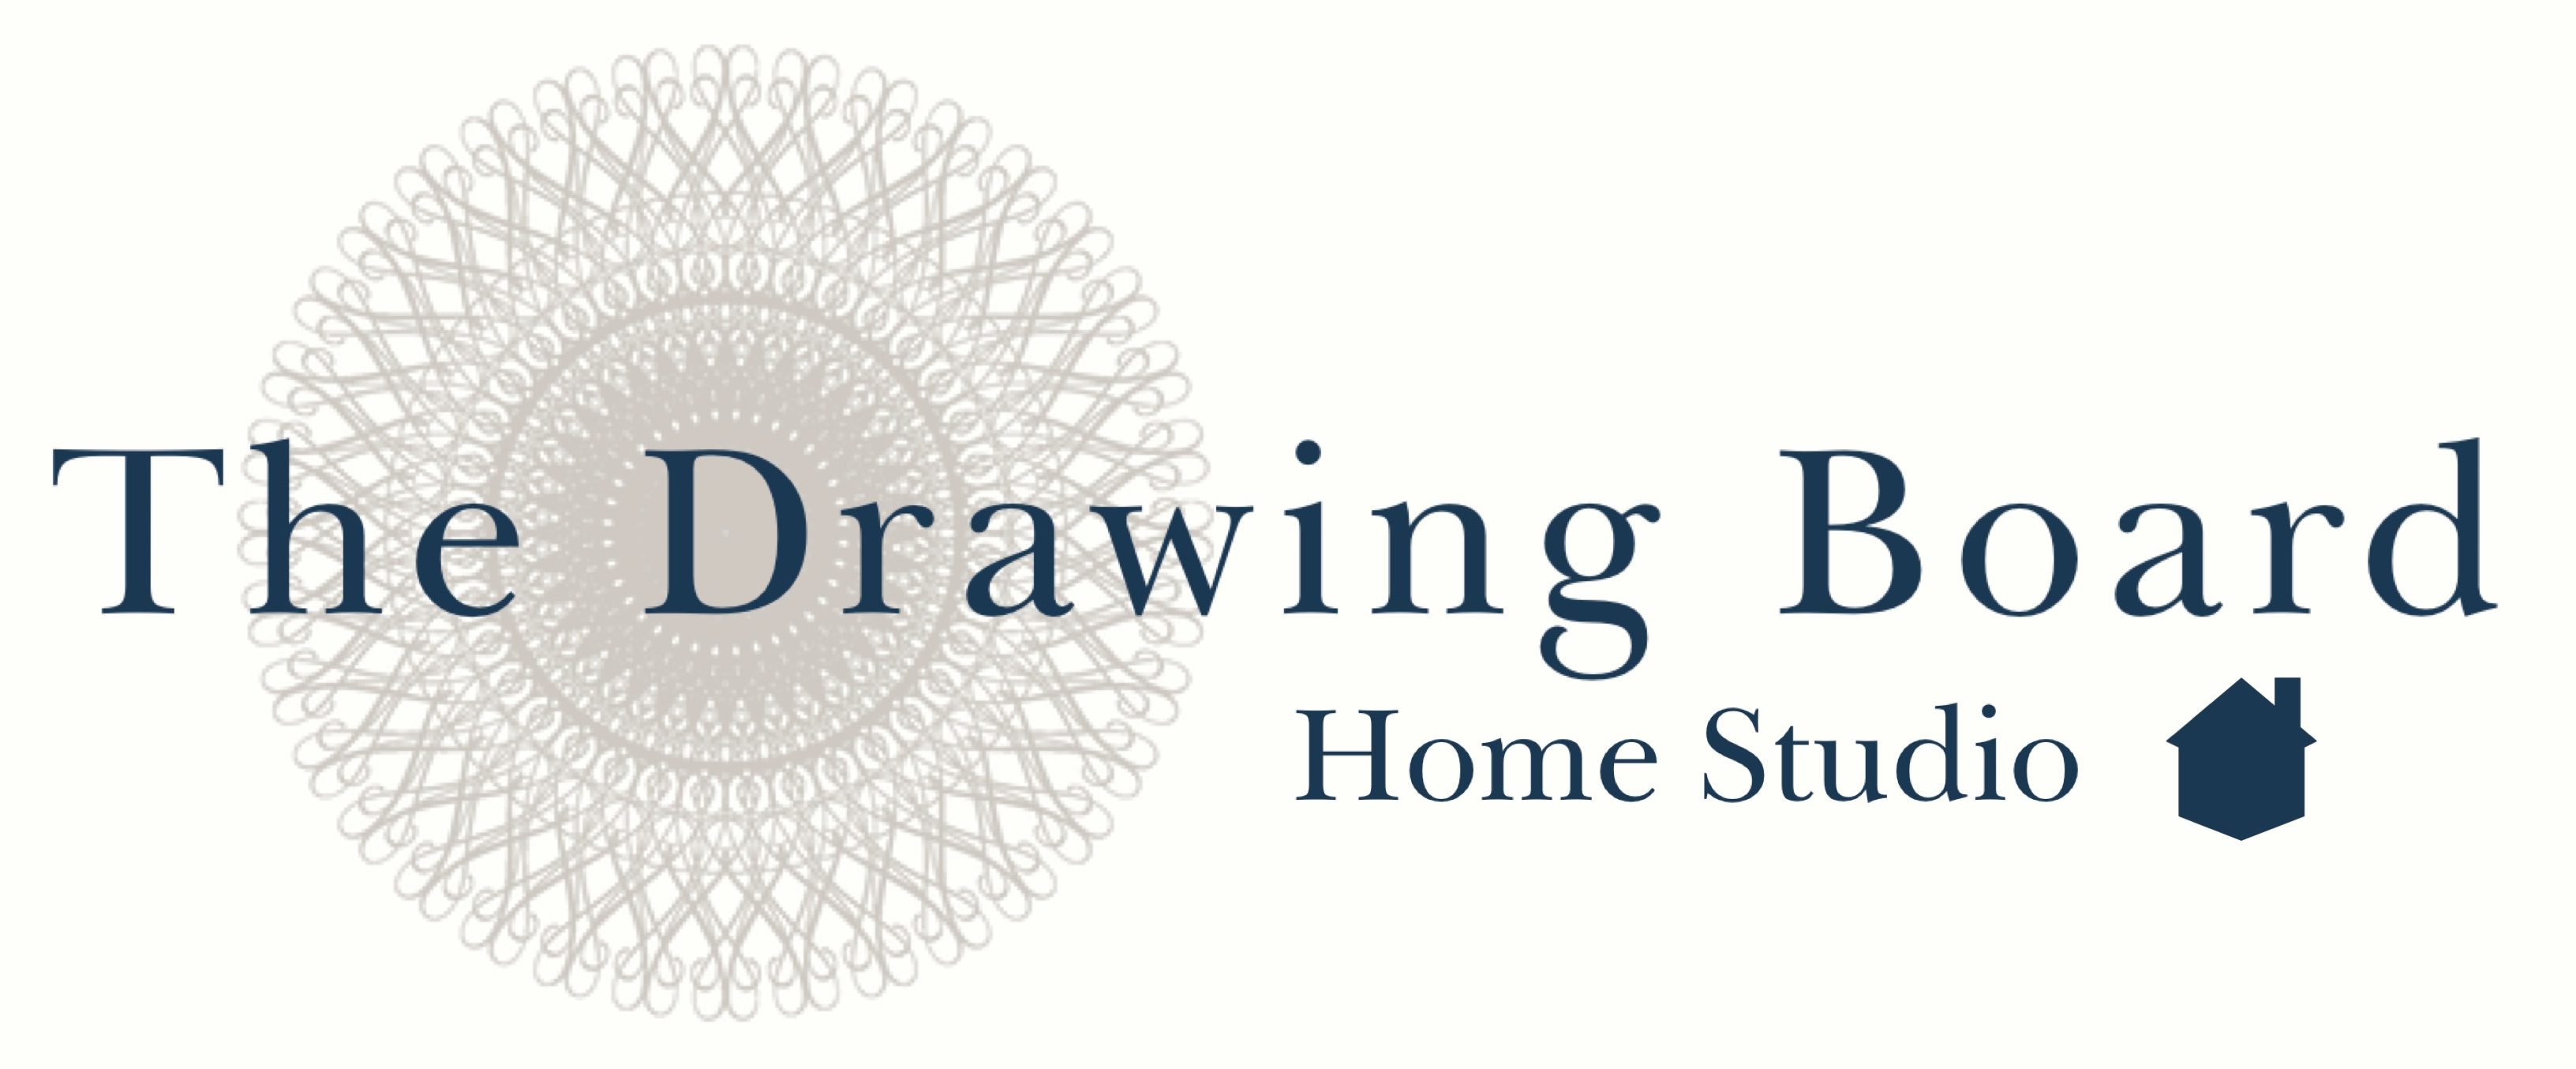 The Drawing Board Home Studio